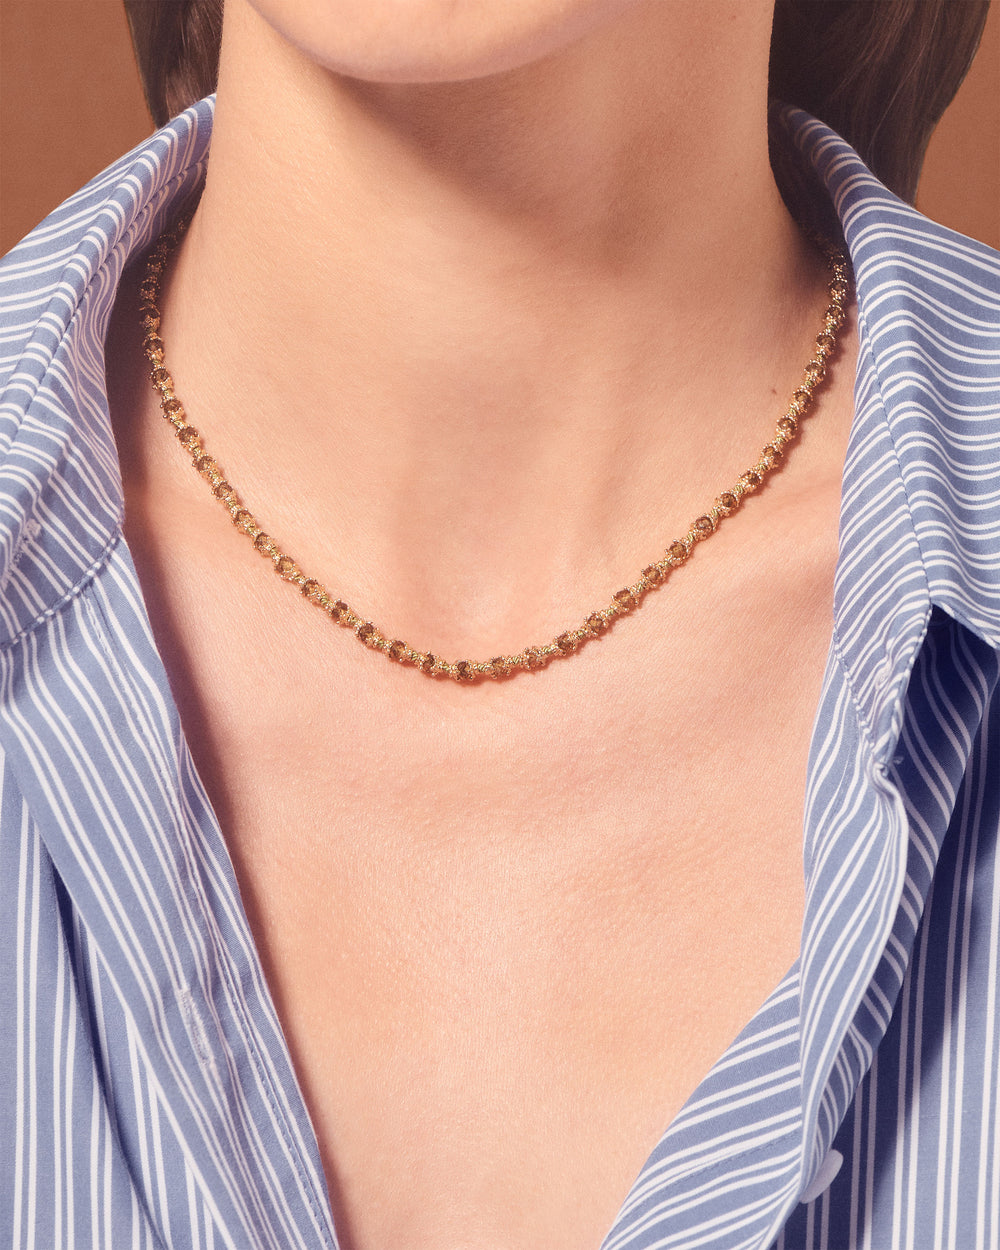 Kamilah necklace